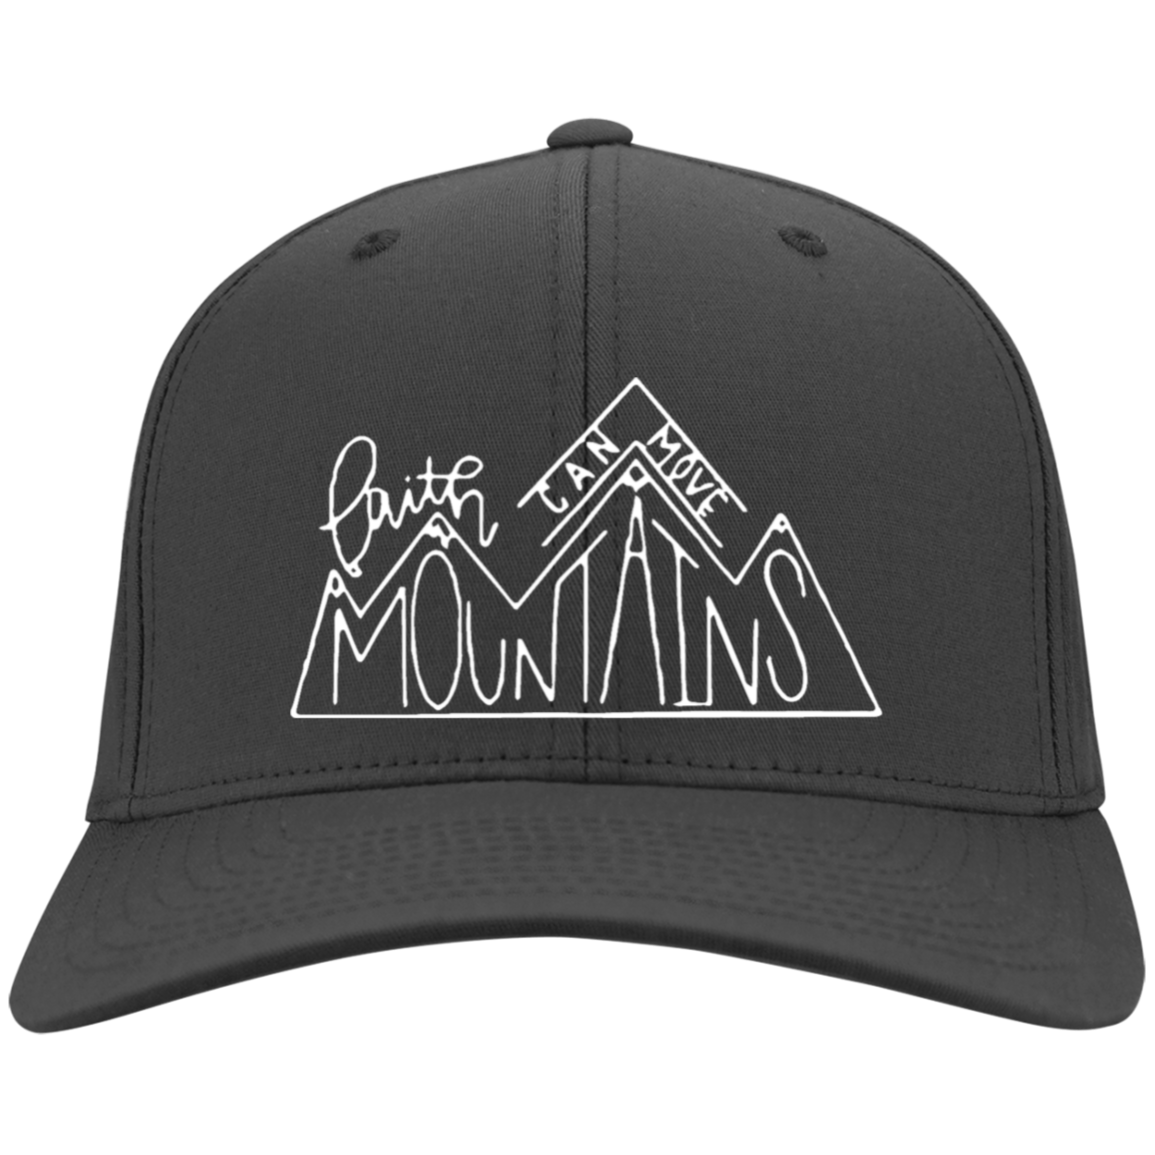 Faith Can Move Mountains Hat